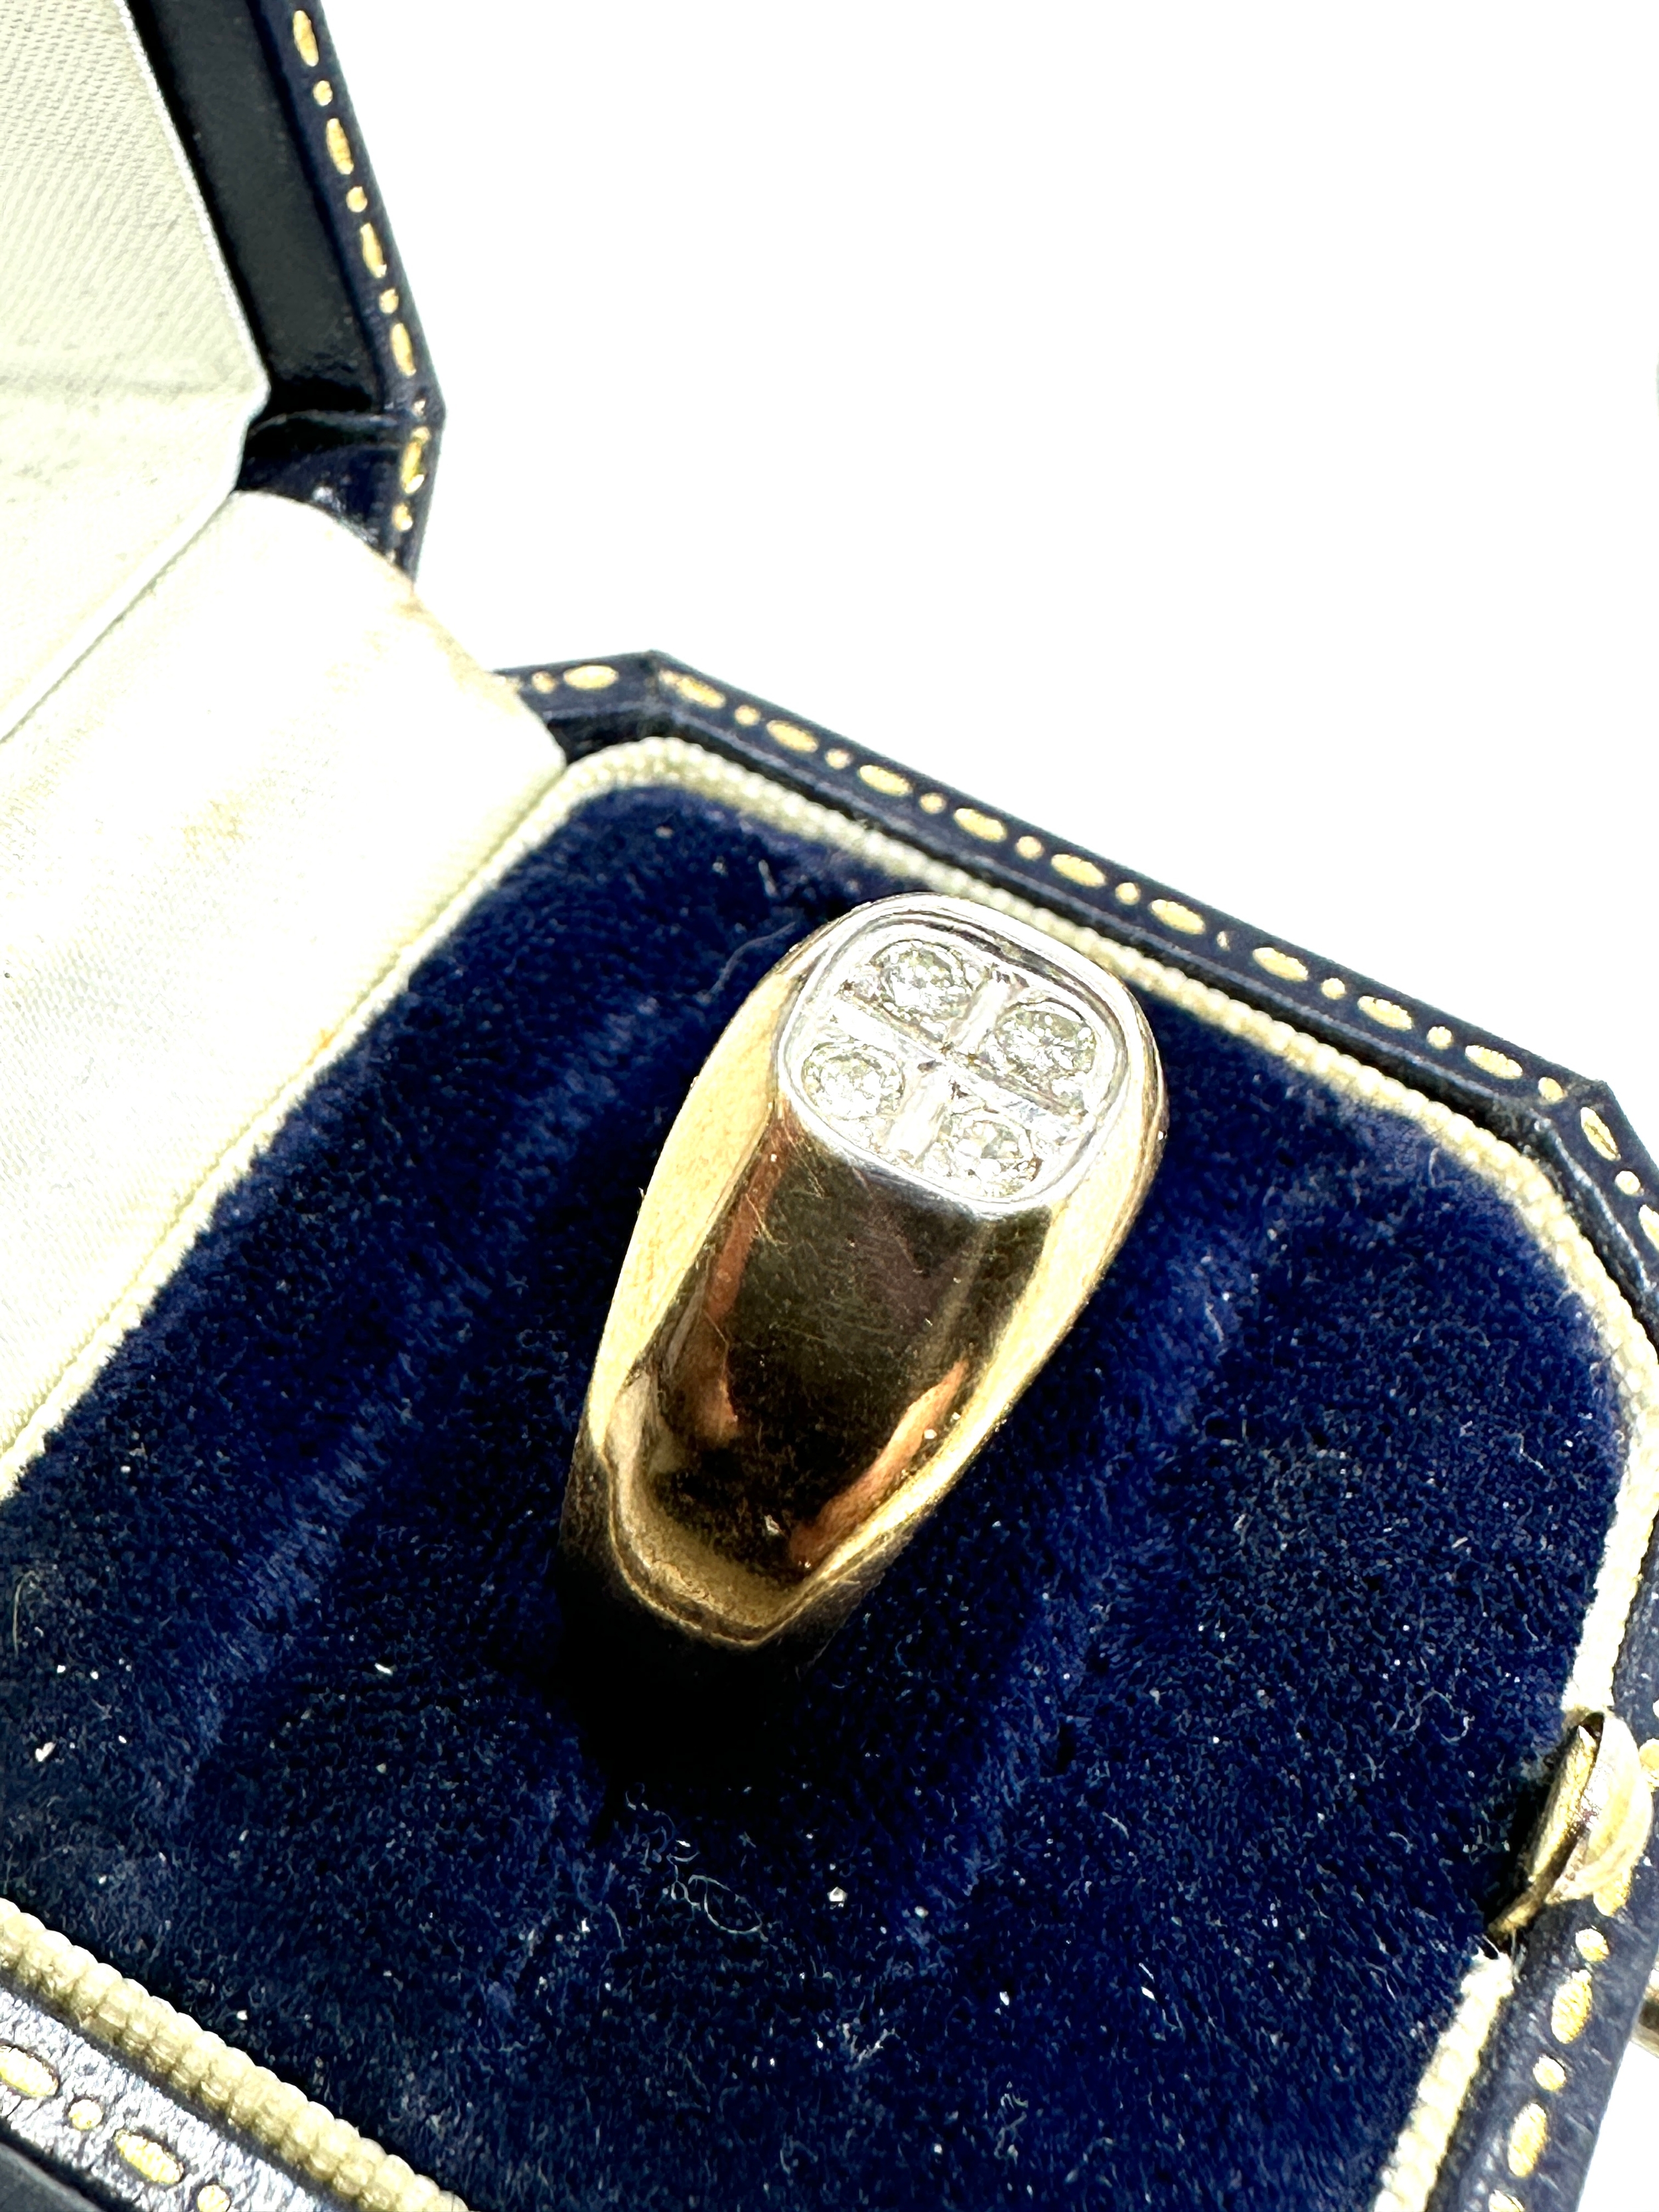 9ct gold diamond signet ring weight 6.1g - Image 2 of 4